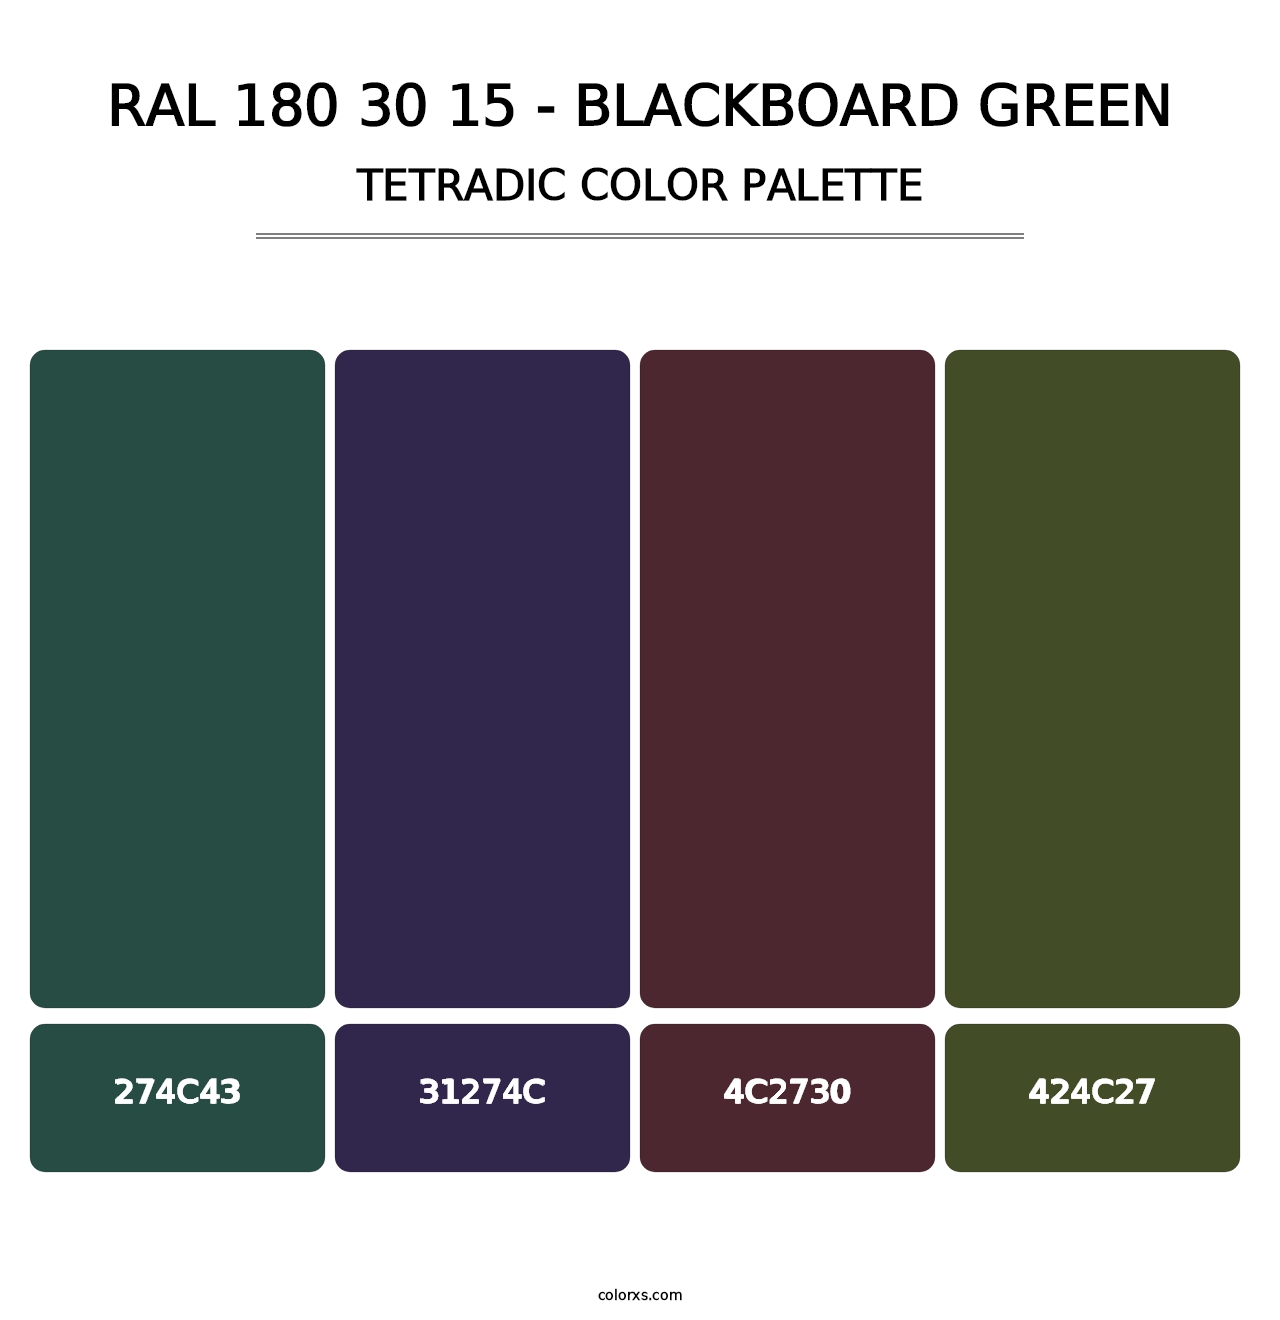 RAL 180 30 15 - Blackboard Green - Tetradic Color Palette